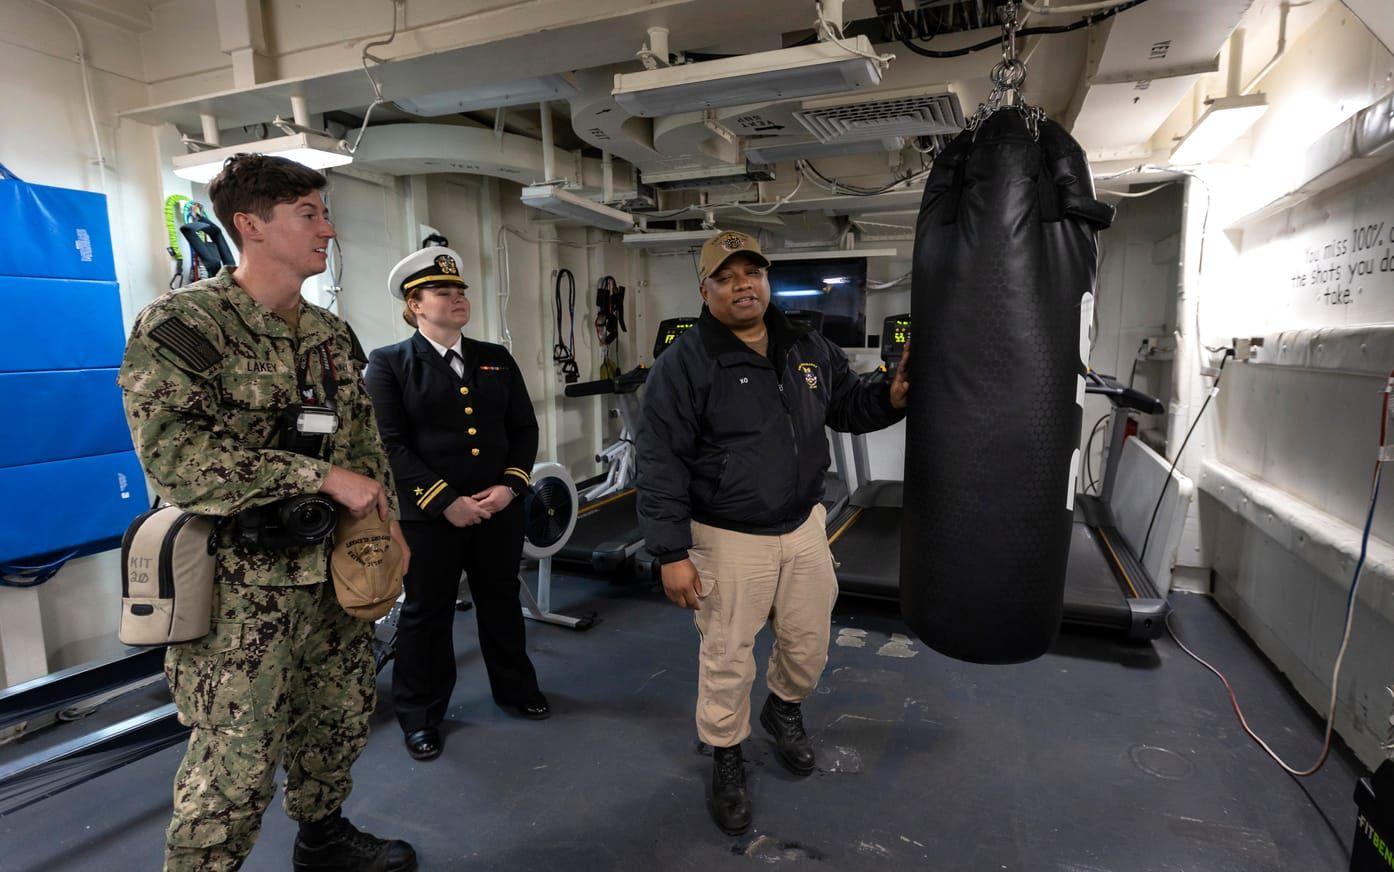 LTJG Elizabeth Armstrong tv, Petty Officer second class Malachi Lakey och XO Commander Anthony Bryant i gymmet.